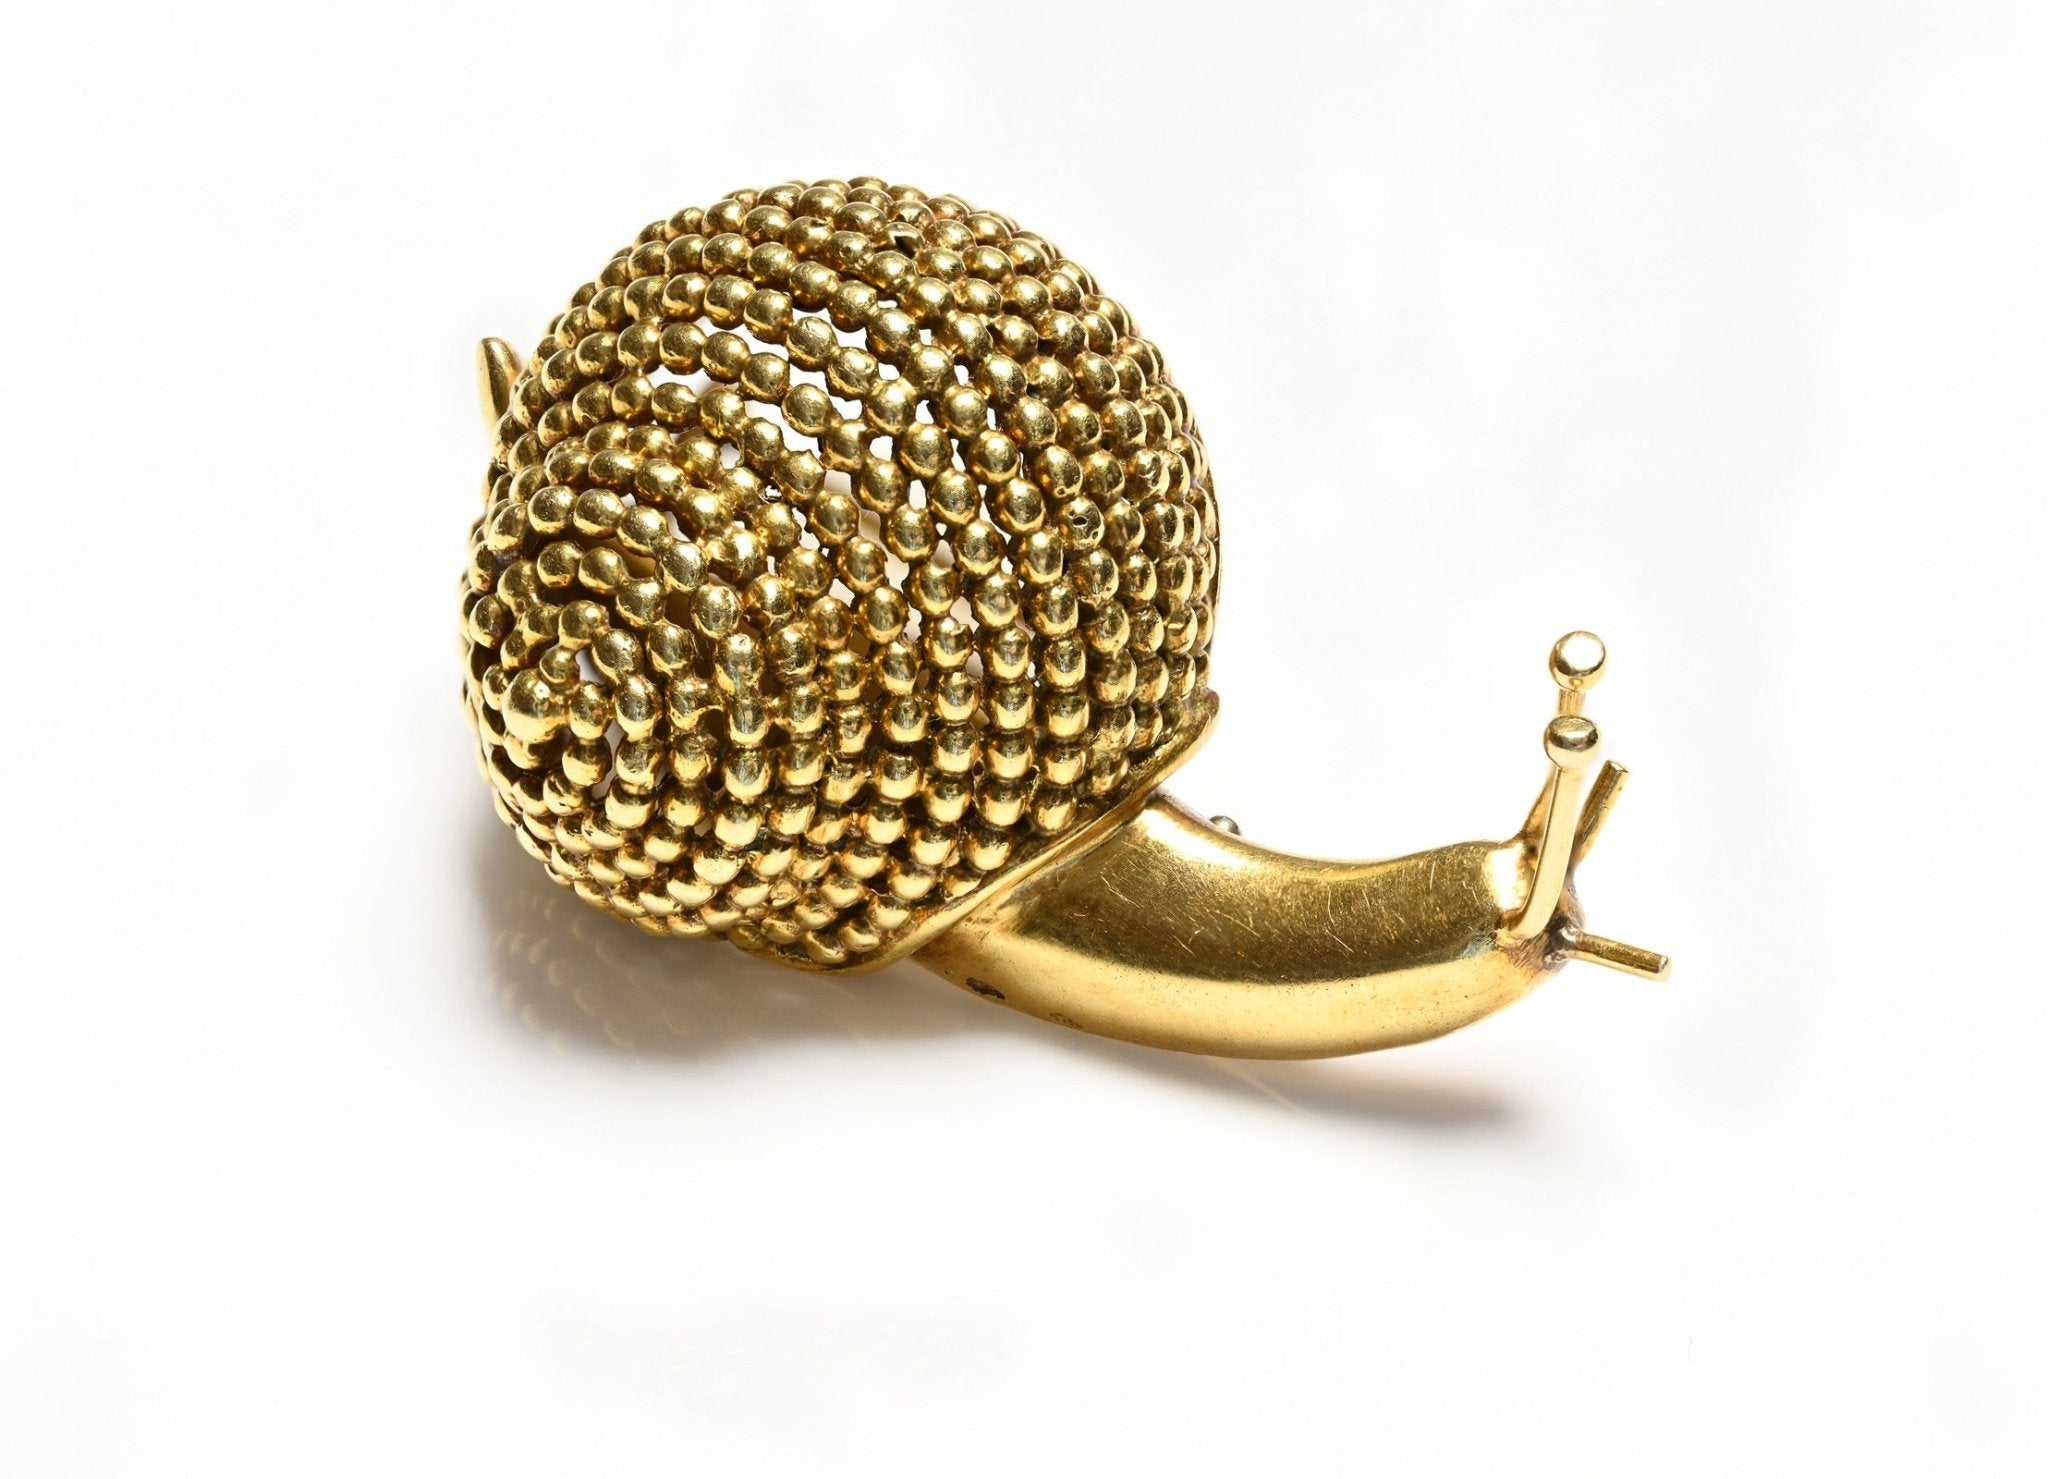 Hermes 18K Yellow Gold Snail Brooch